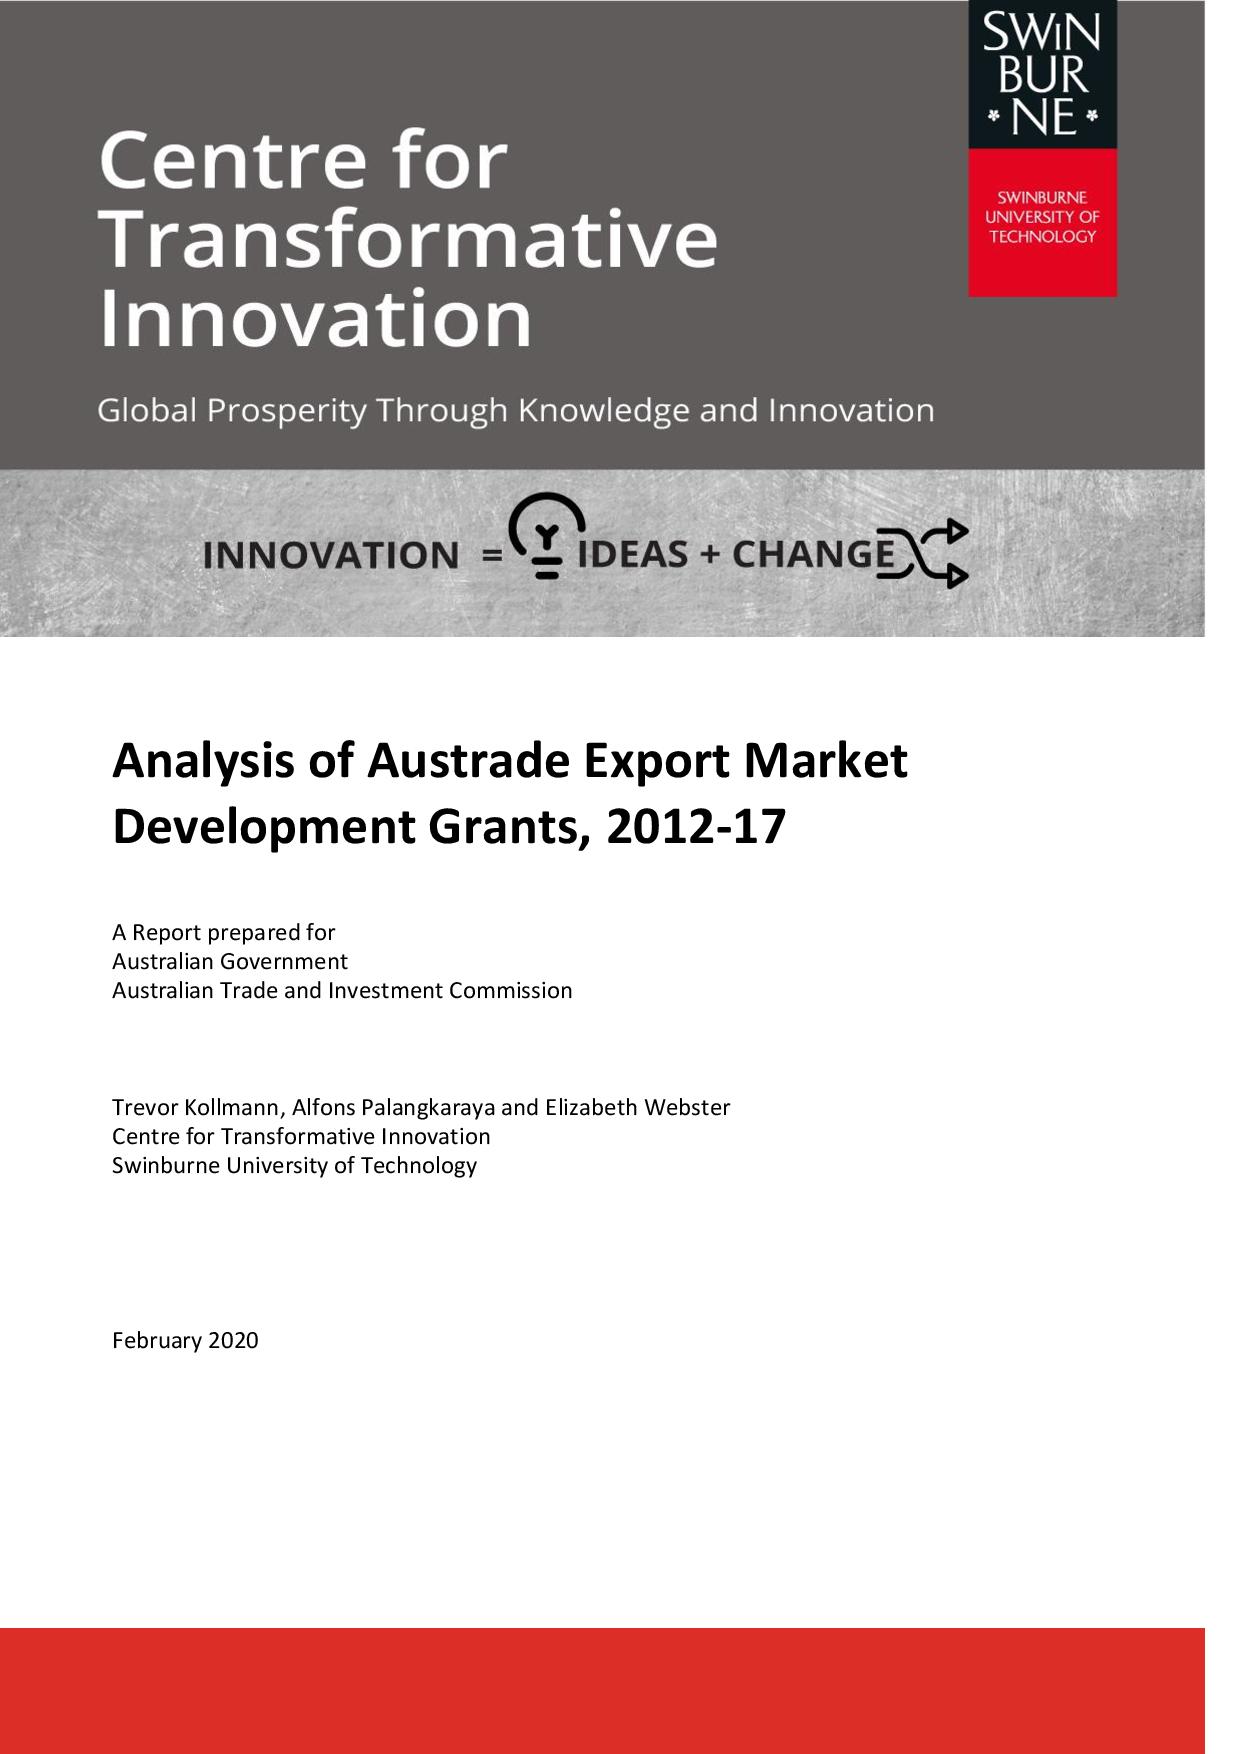 Analysis of Austrade Export Market Development Grants 2012-17